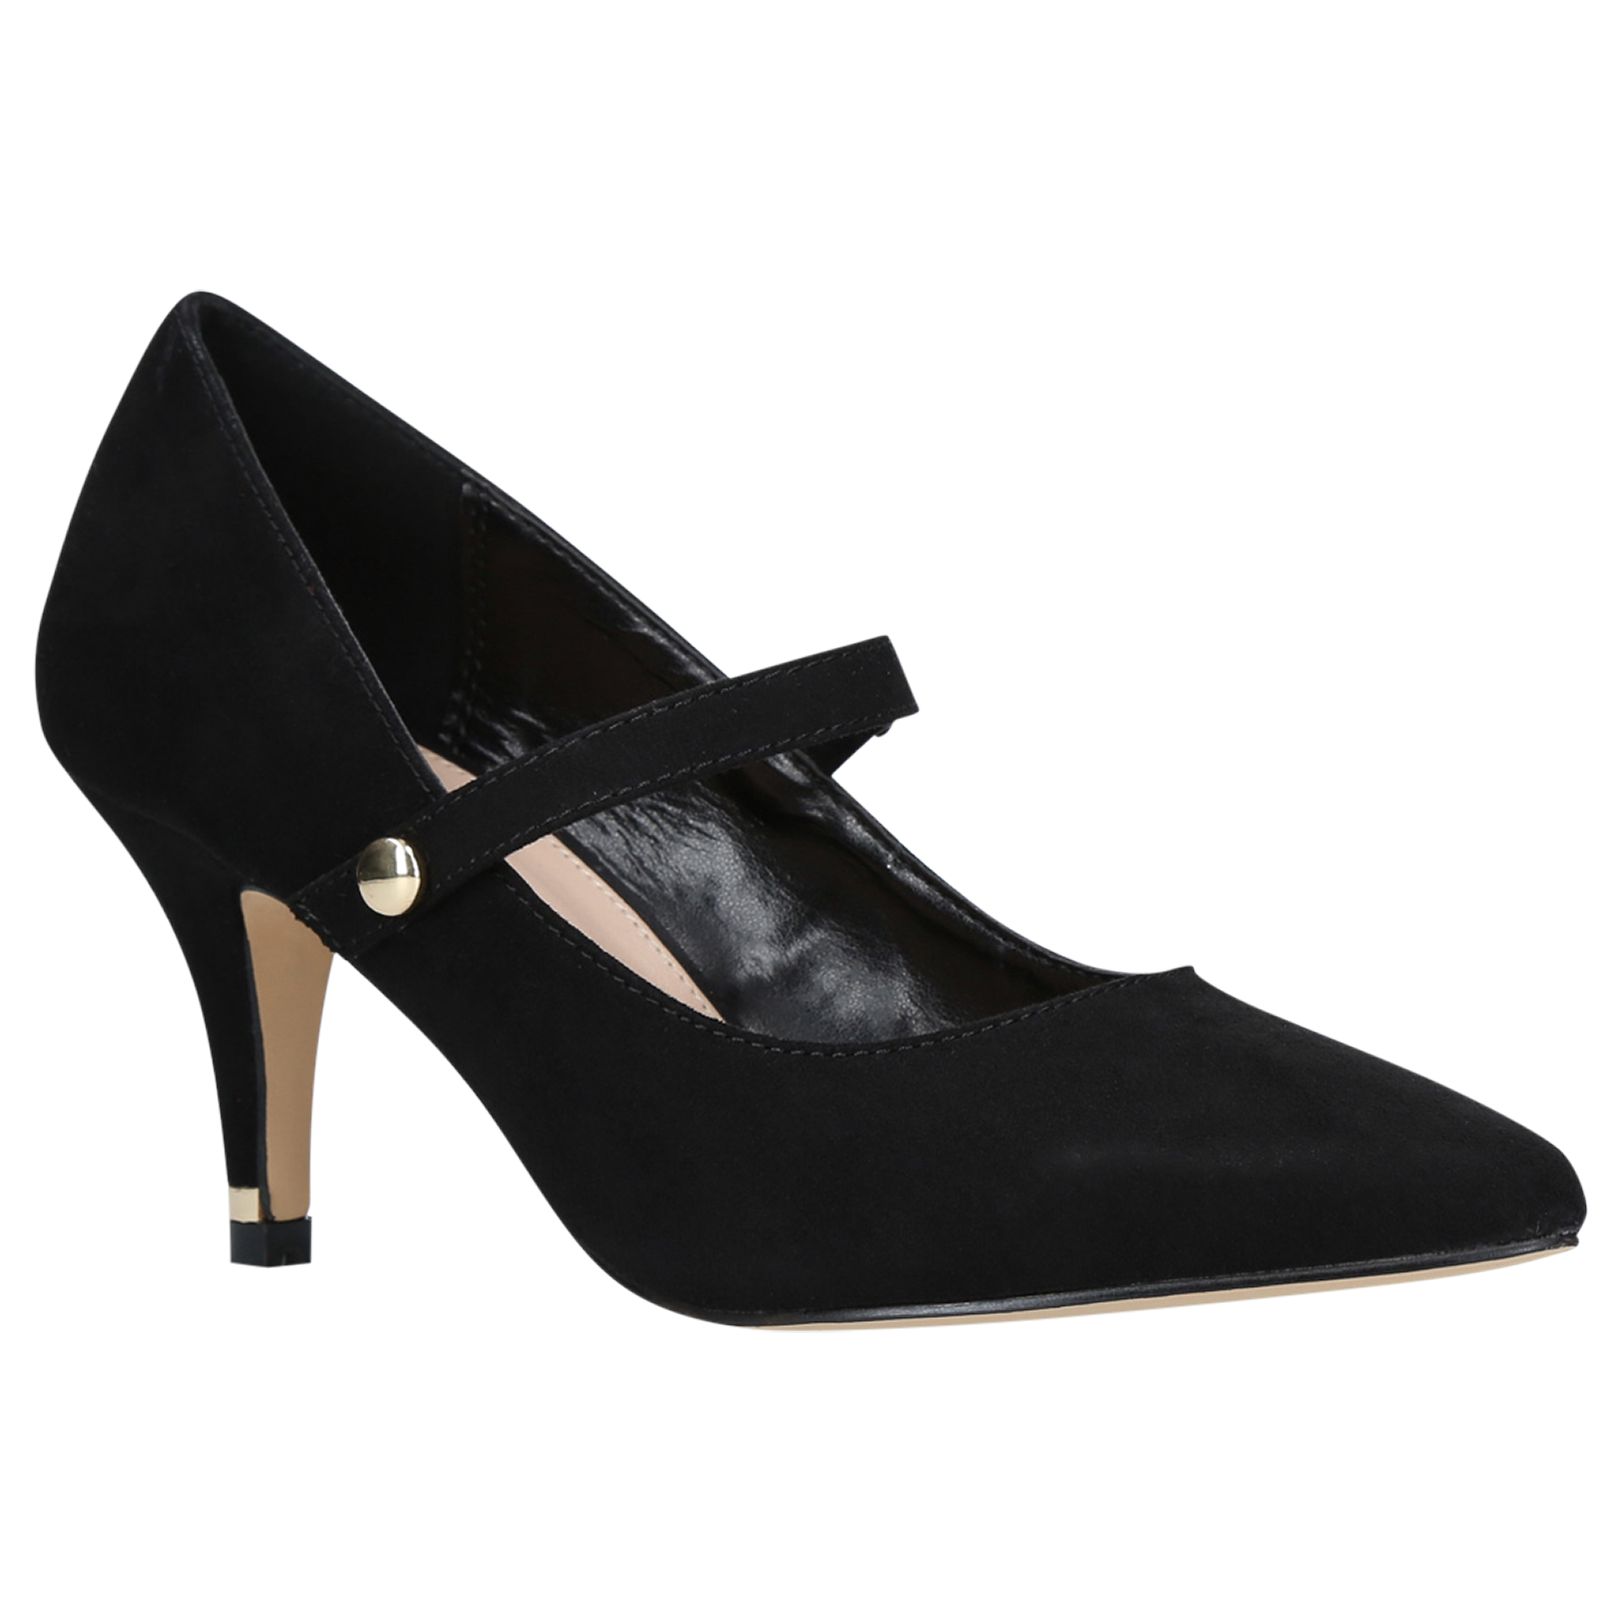 Carvela Kream Court Shoes, Black, 4